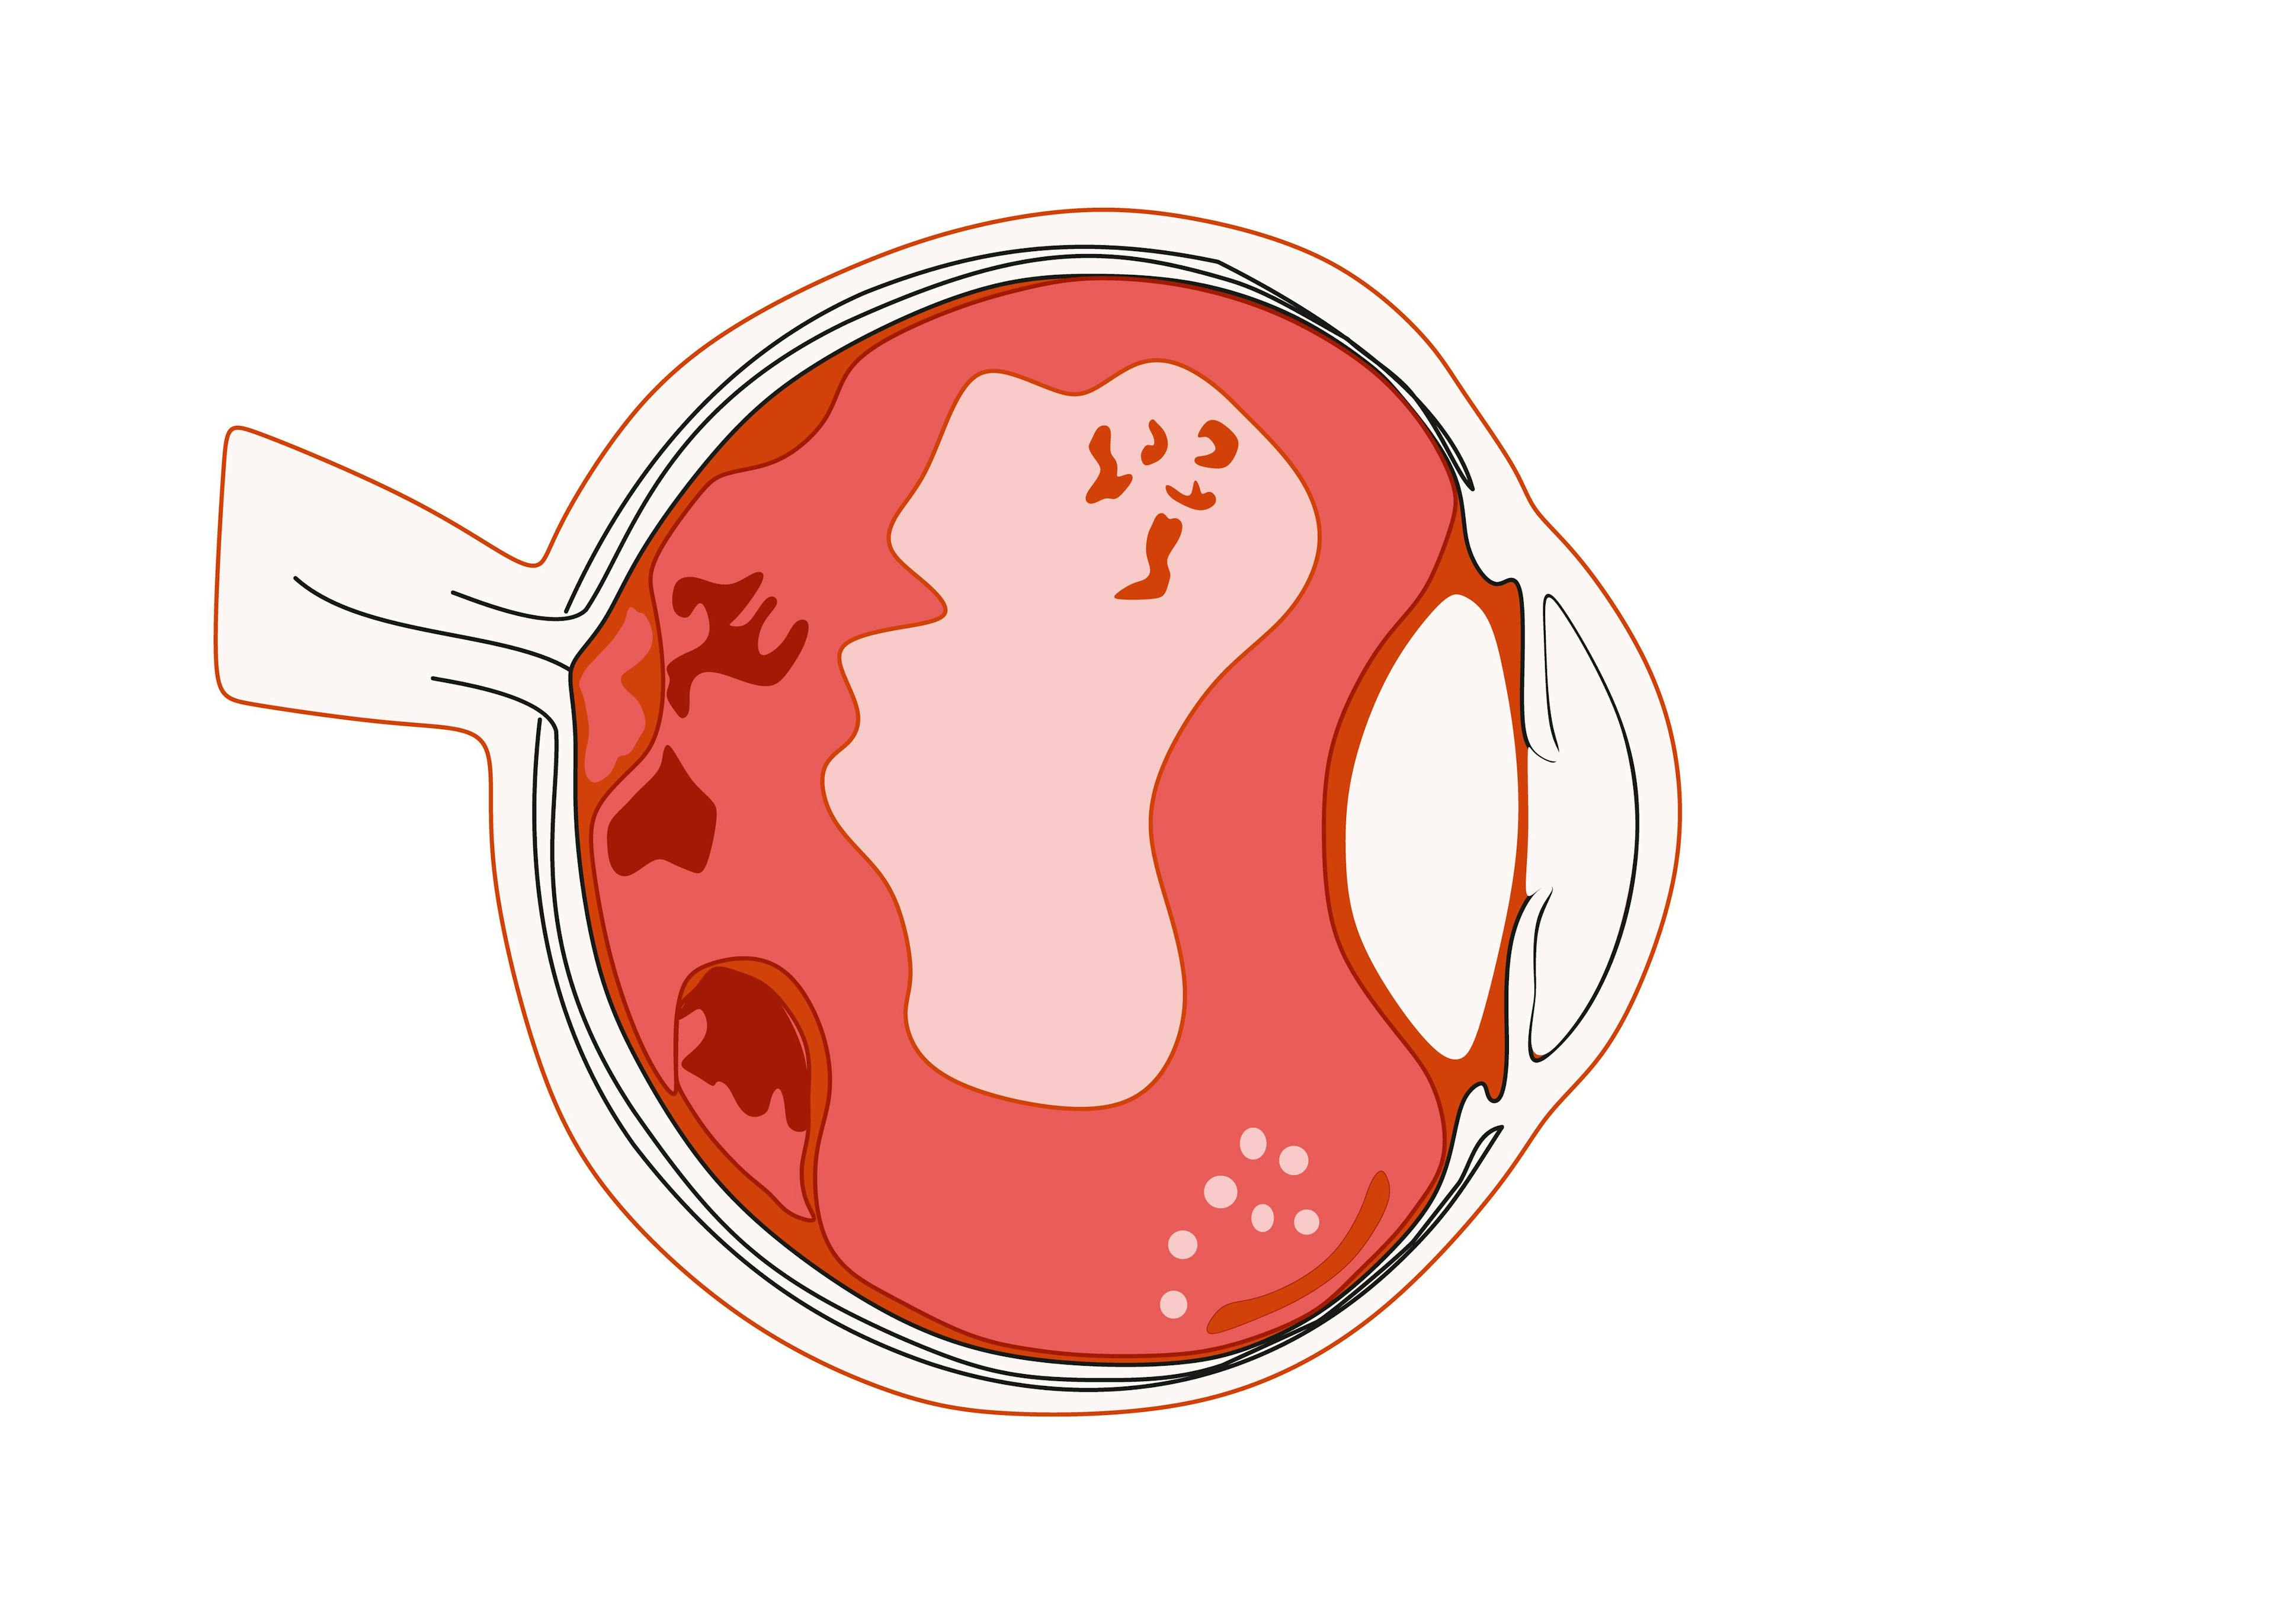 In-home self-monitoring of AMD patients identifies retinal fluid 